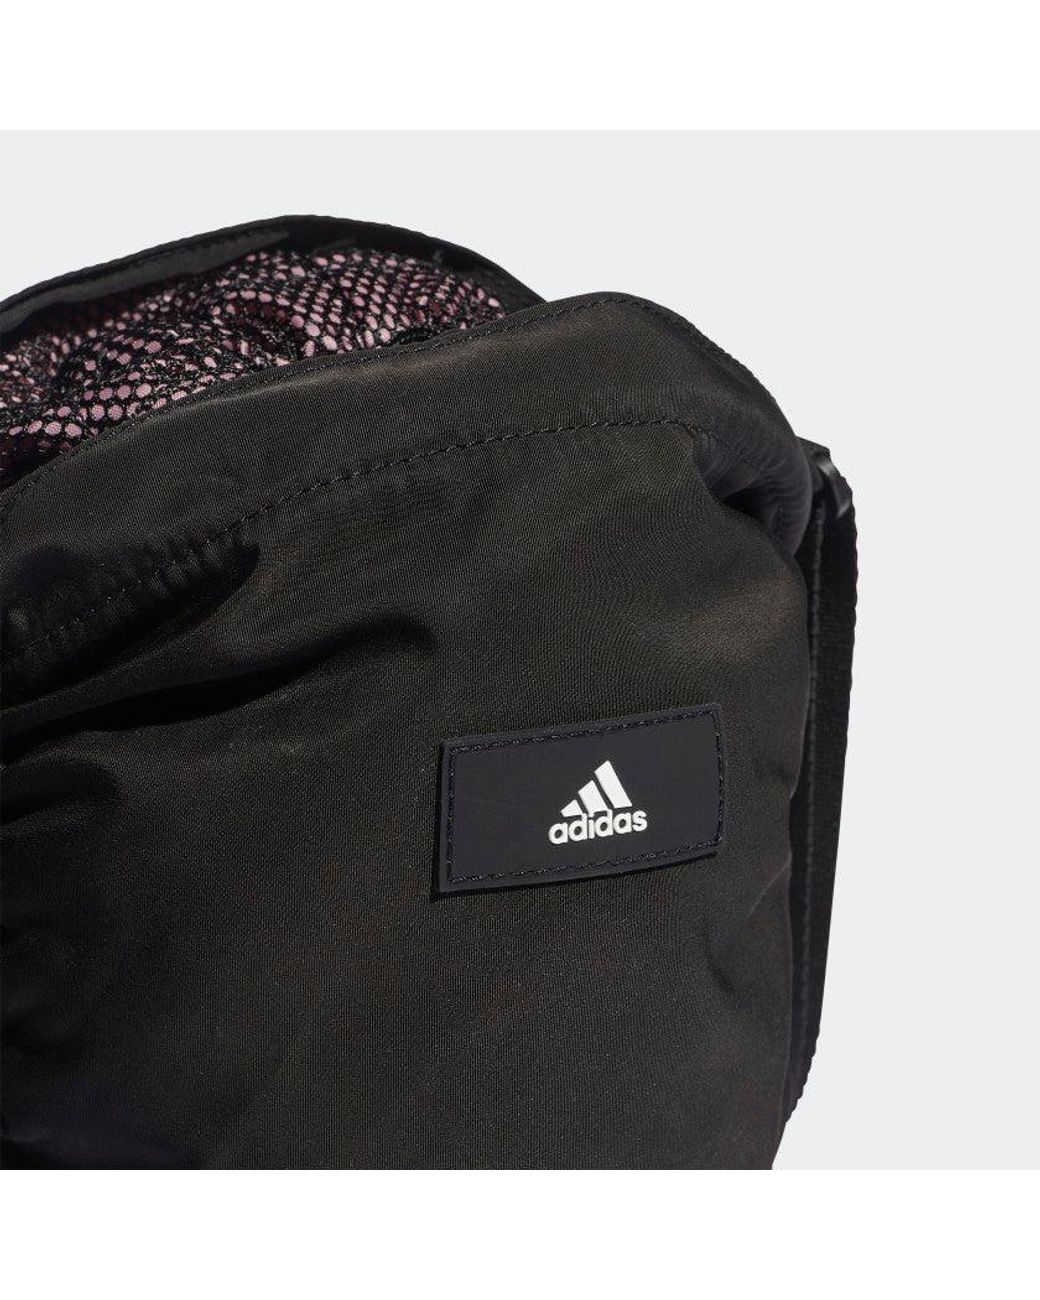 adidas Yoga Convertible Mat Sleeve in Black